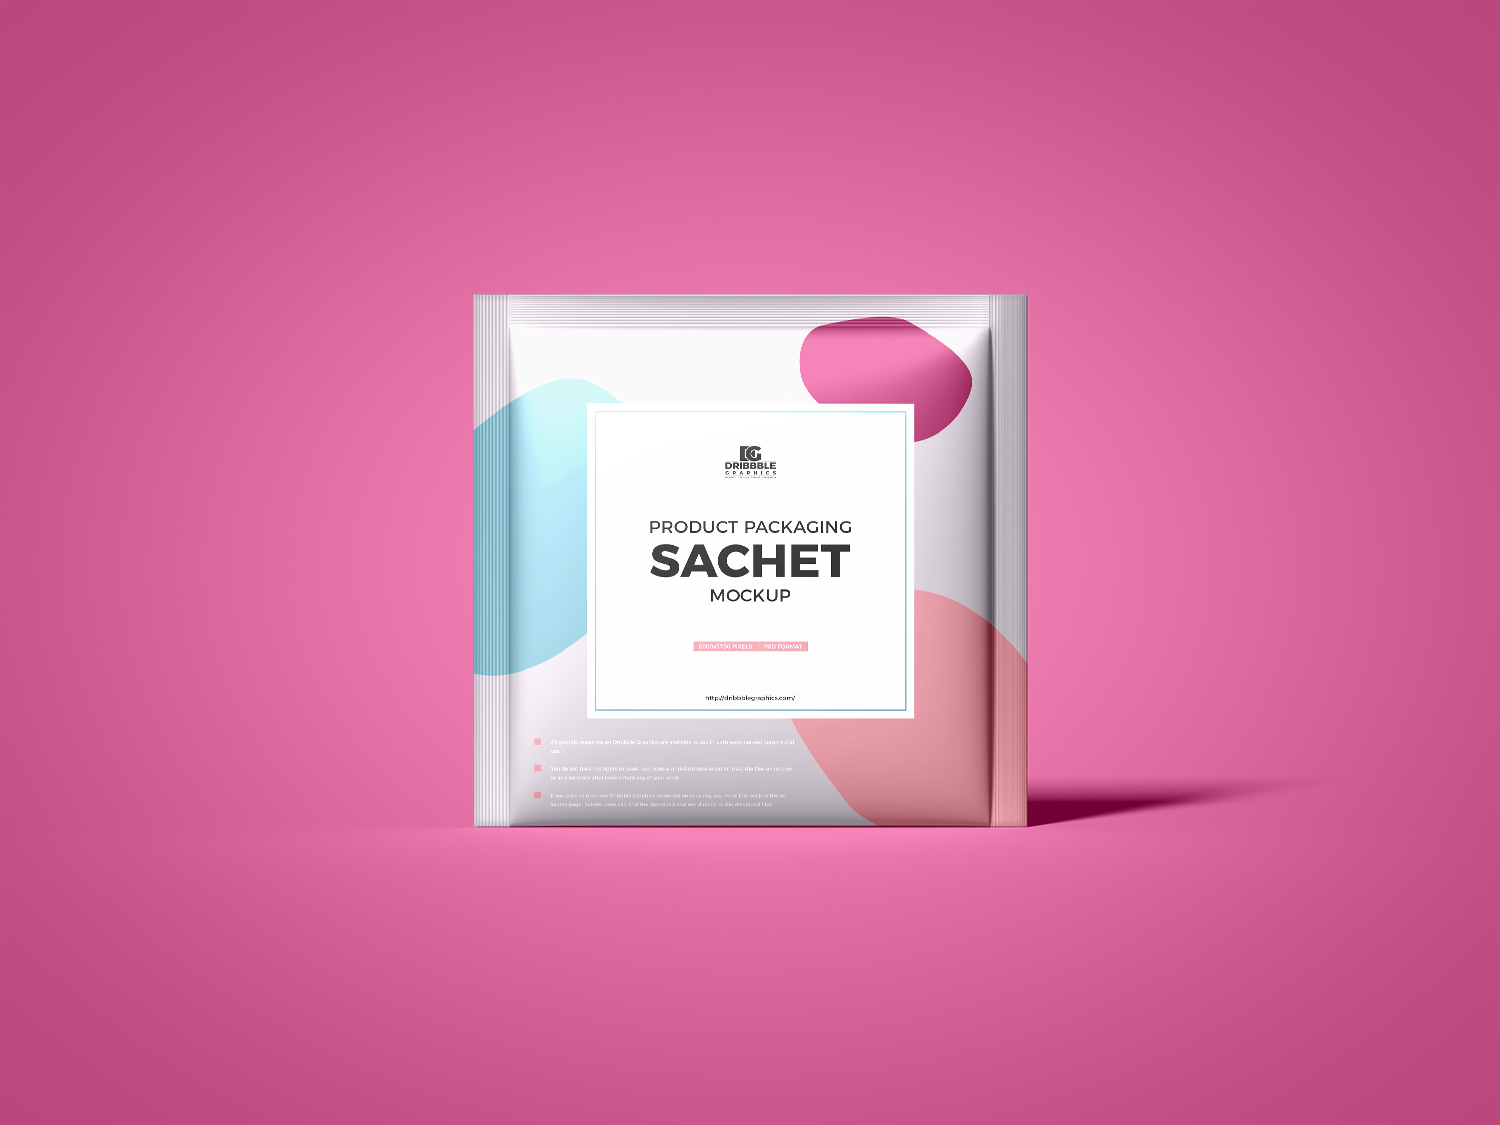 Product Packaging Sachet Mockup